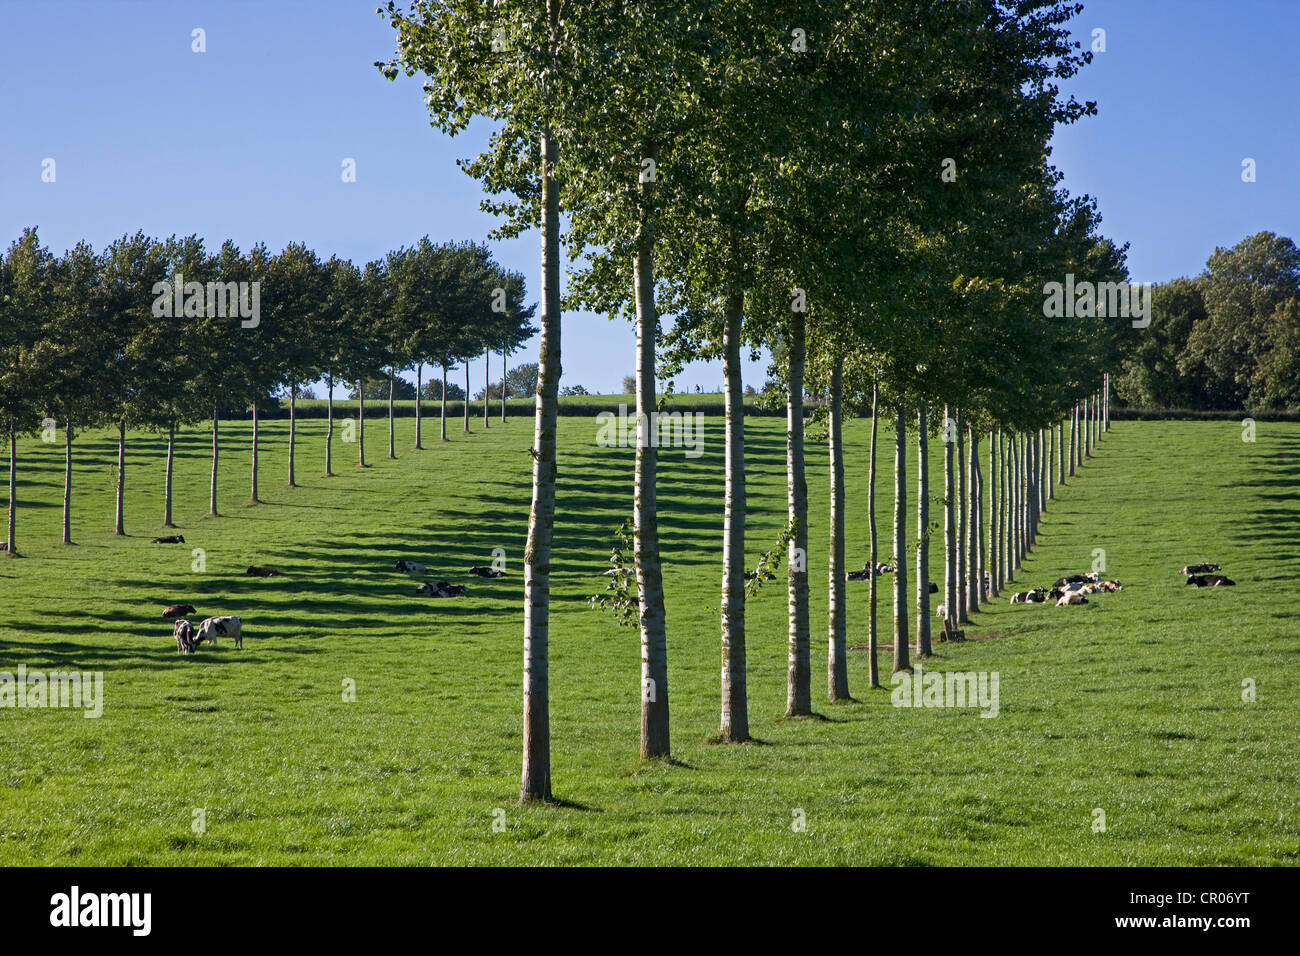 Row of poplars (Populus) in field with cows, Belgium Stock Photo